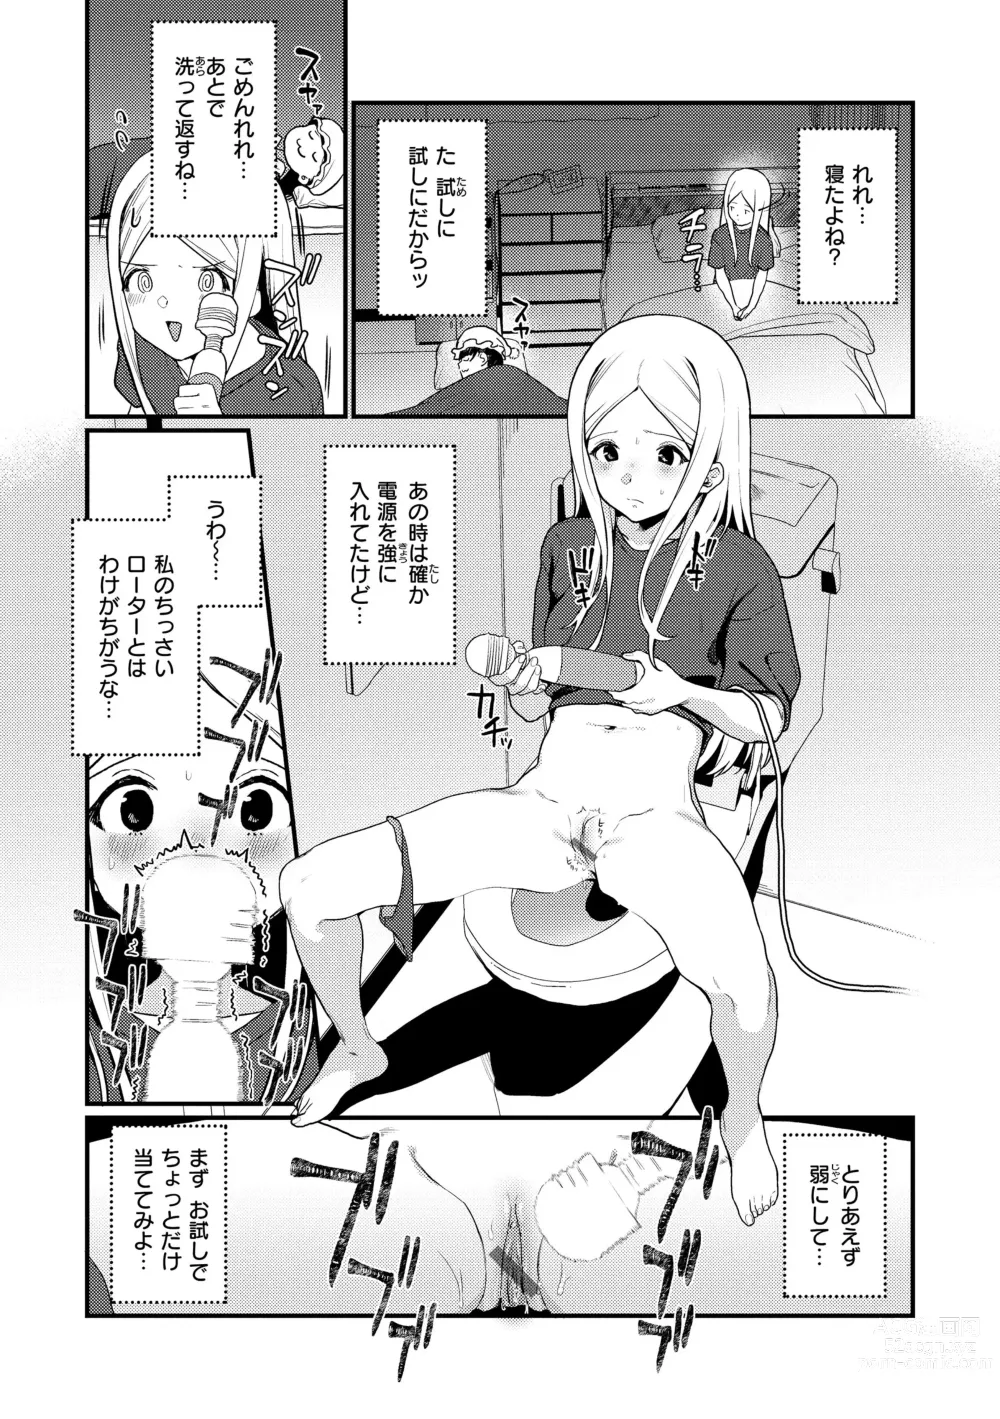 Page 158 of manga Wakarasete. - Show me reality.